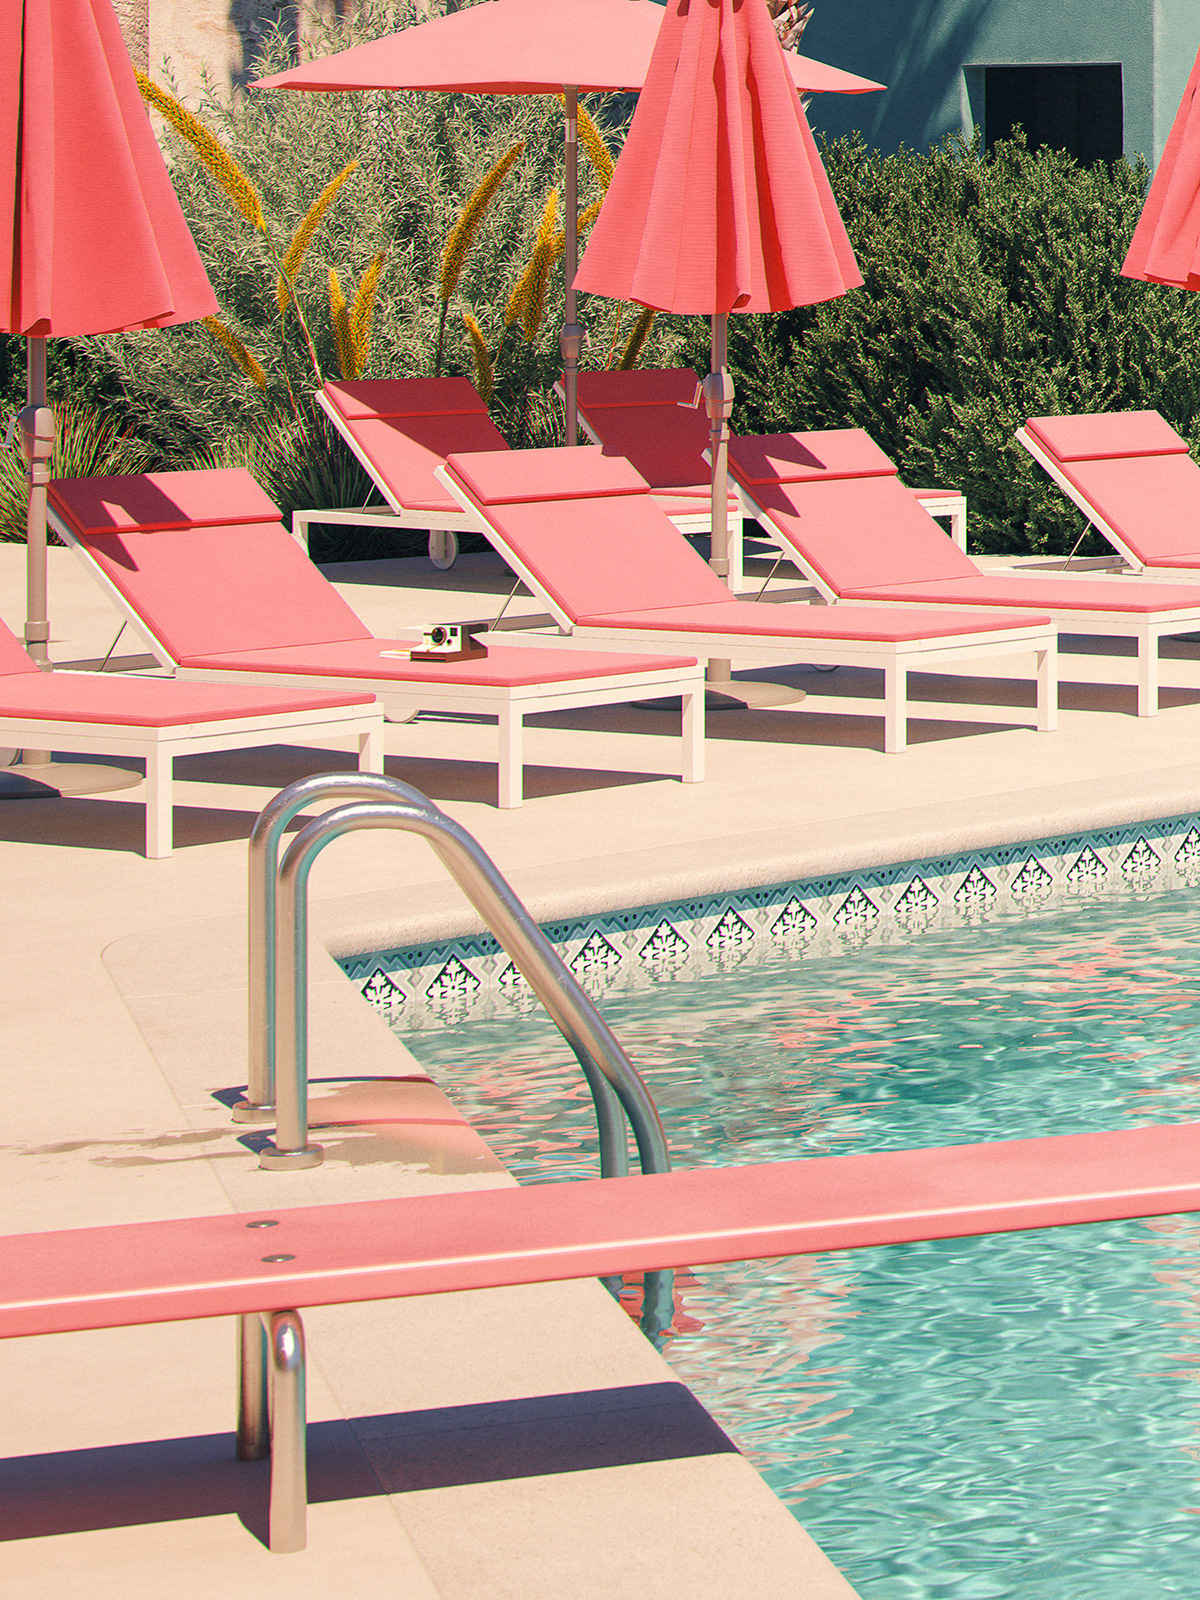 CGI Render visualization architecture mid-century modern California Palm Springs hotel palms swimming pool